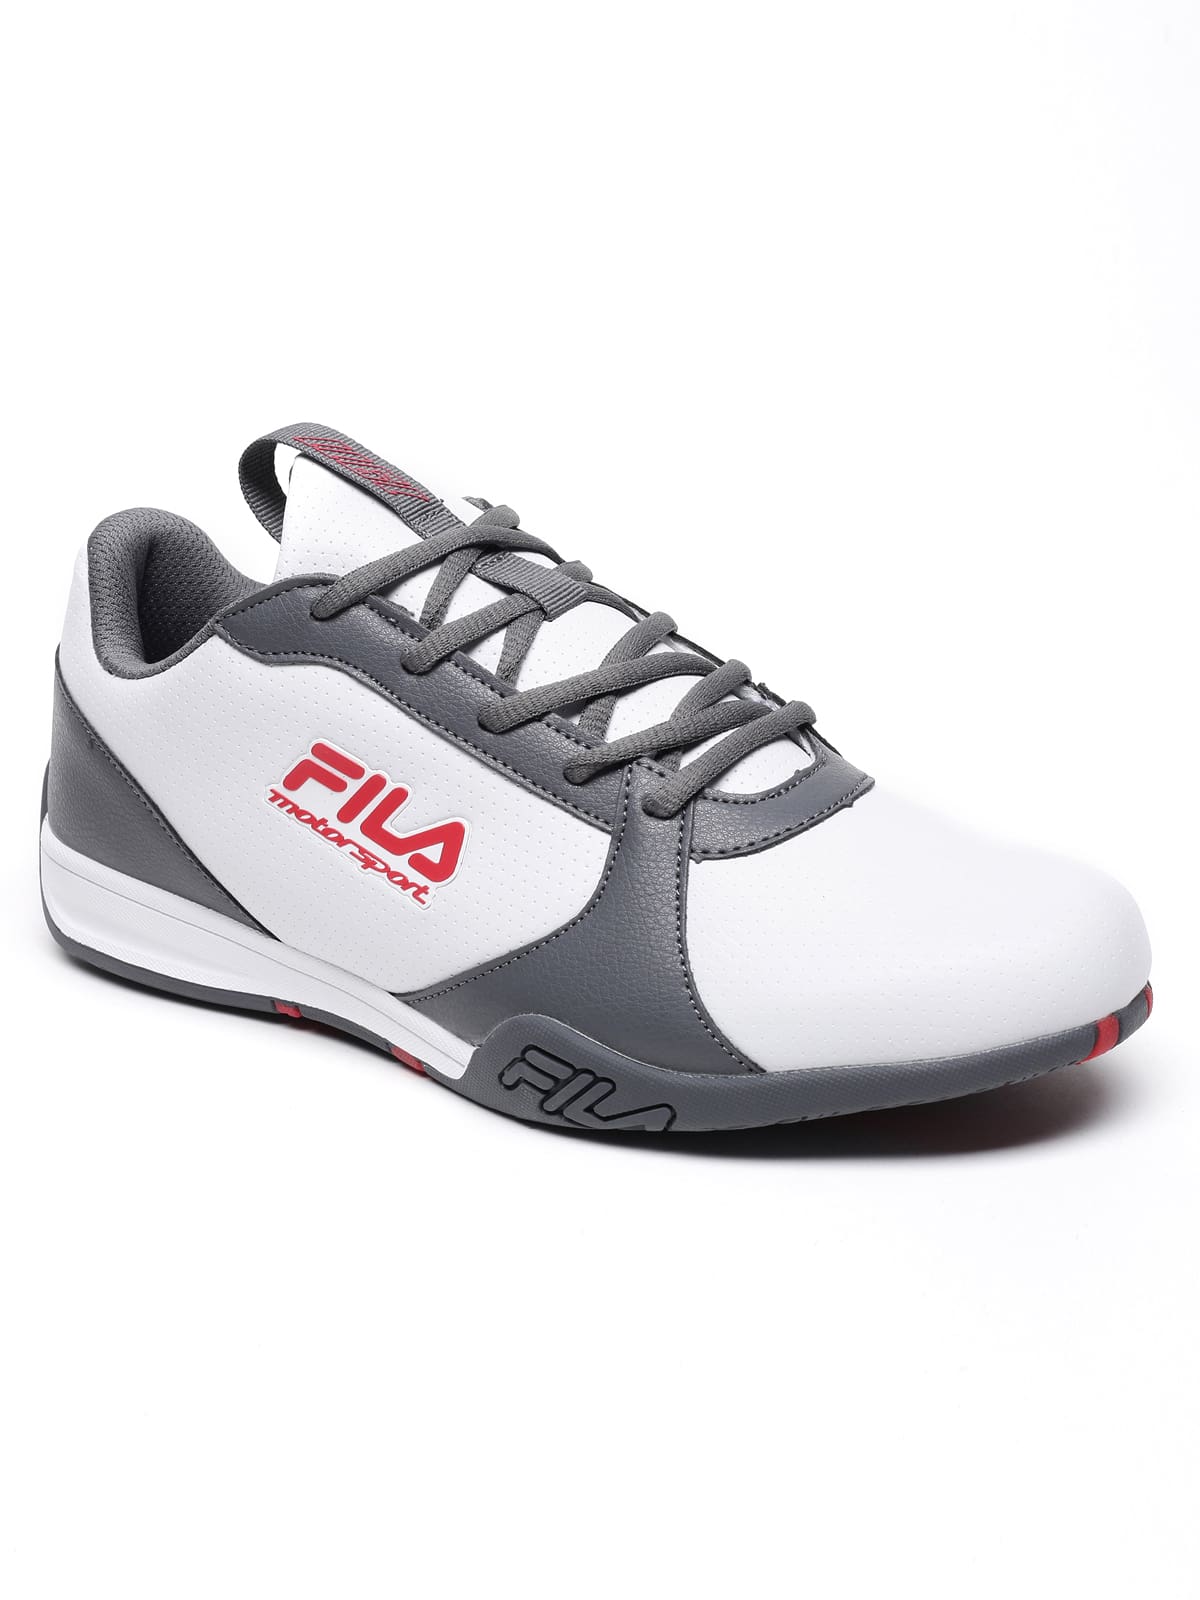 Buy FILA Riding Shoes For Men Online at Best Price - Shop Online for  Footwears in India | Flipkart.com